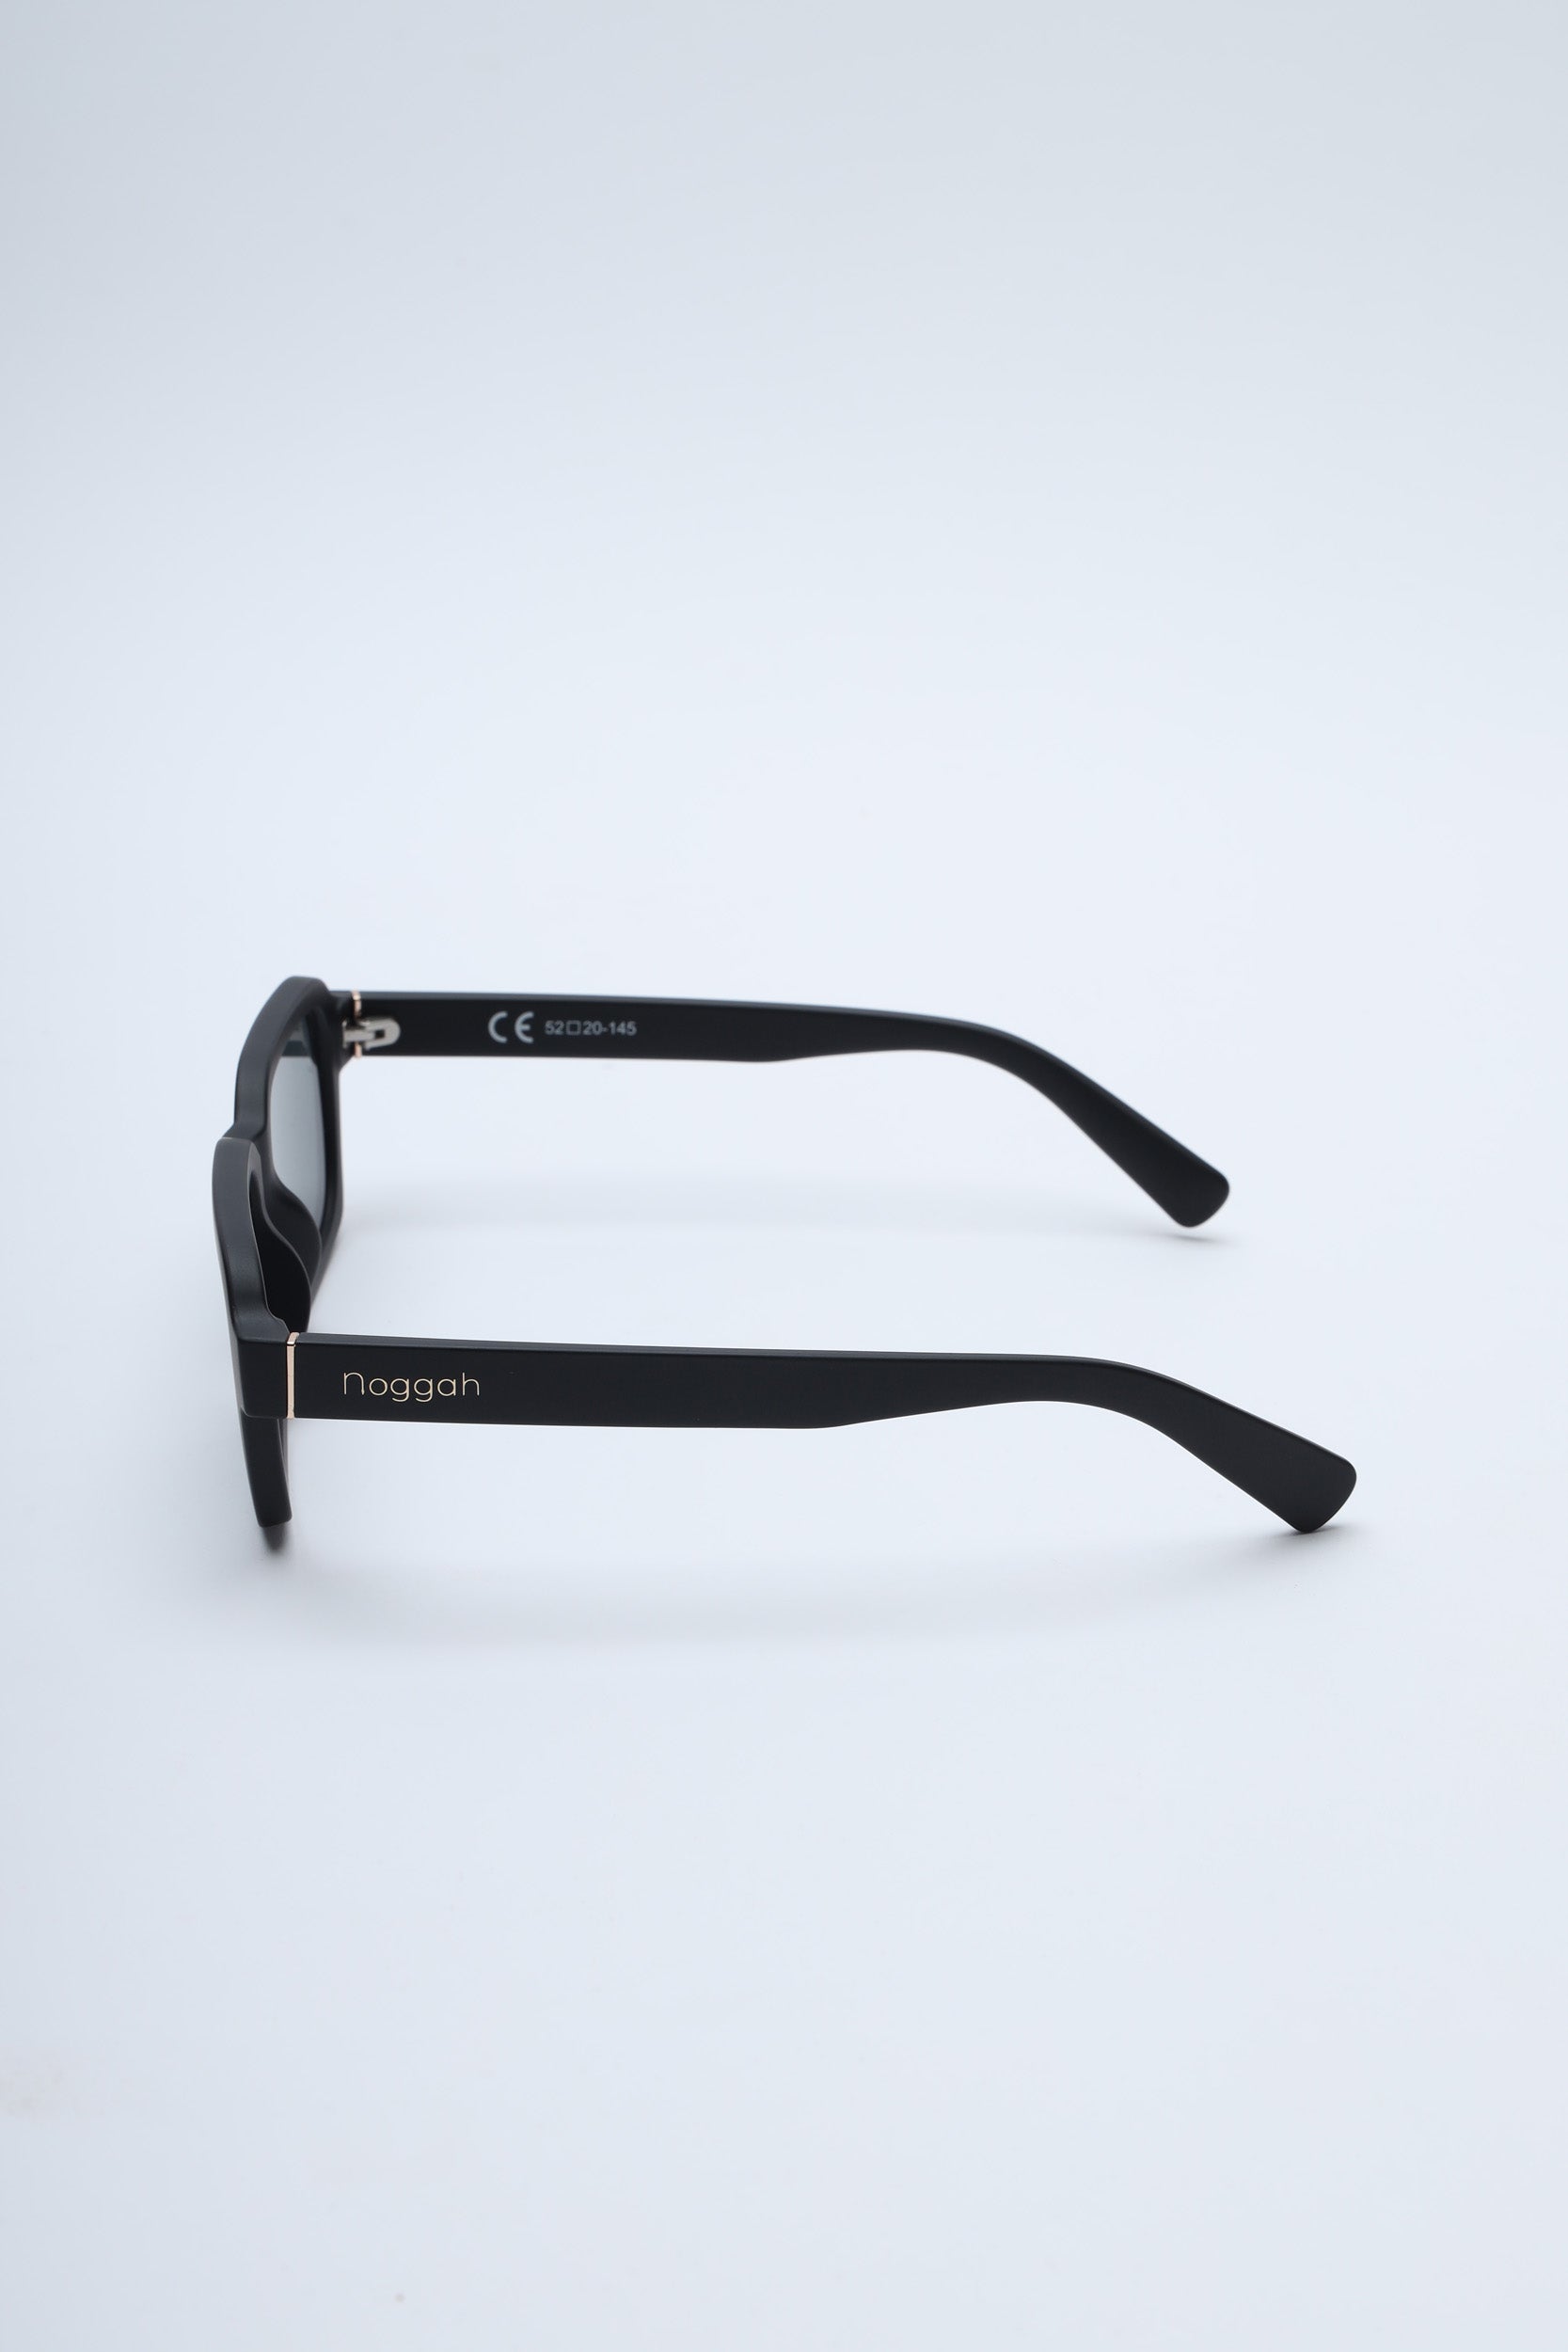 NS1005YFTGL PC Orange Frame with Green Glass Lens Sunglasses